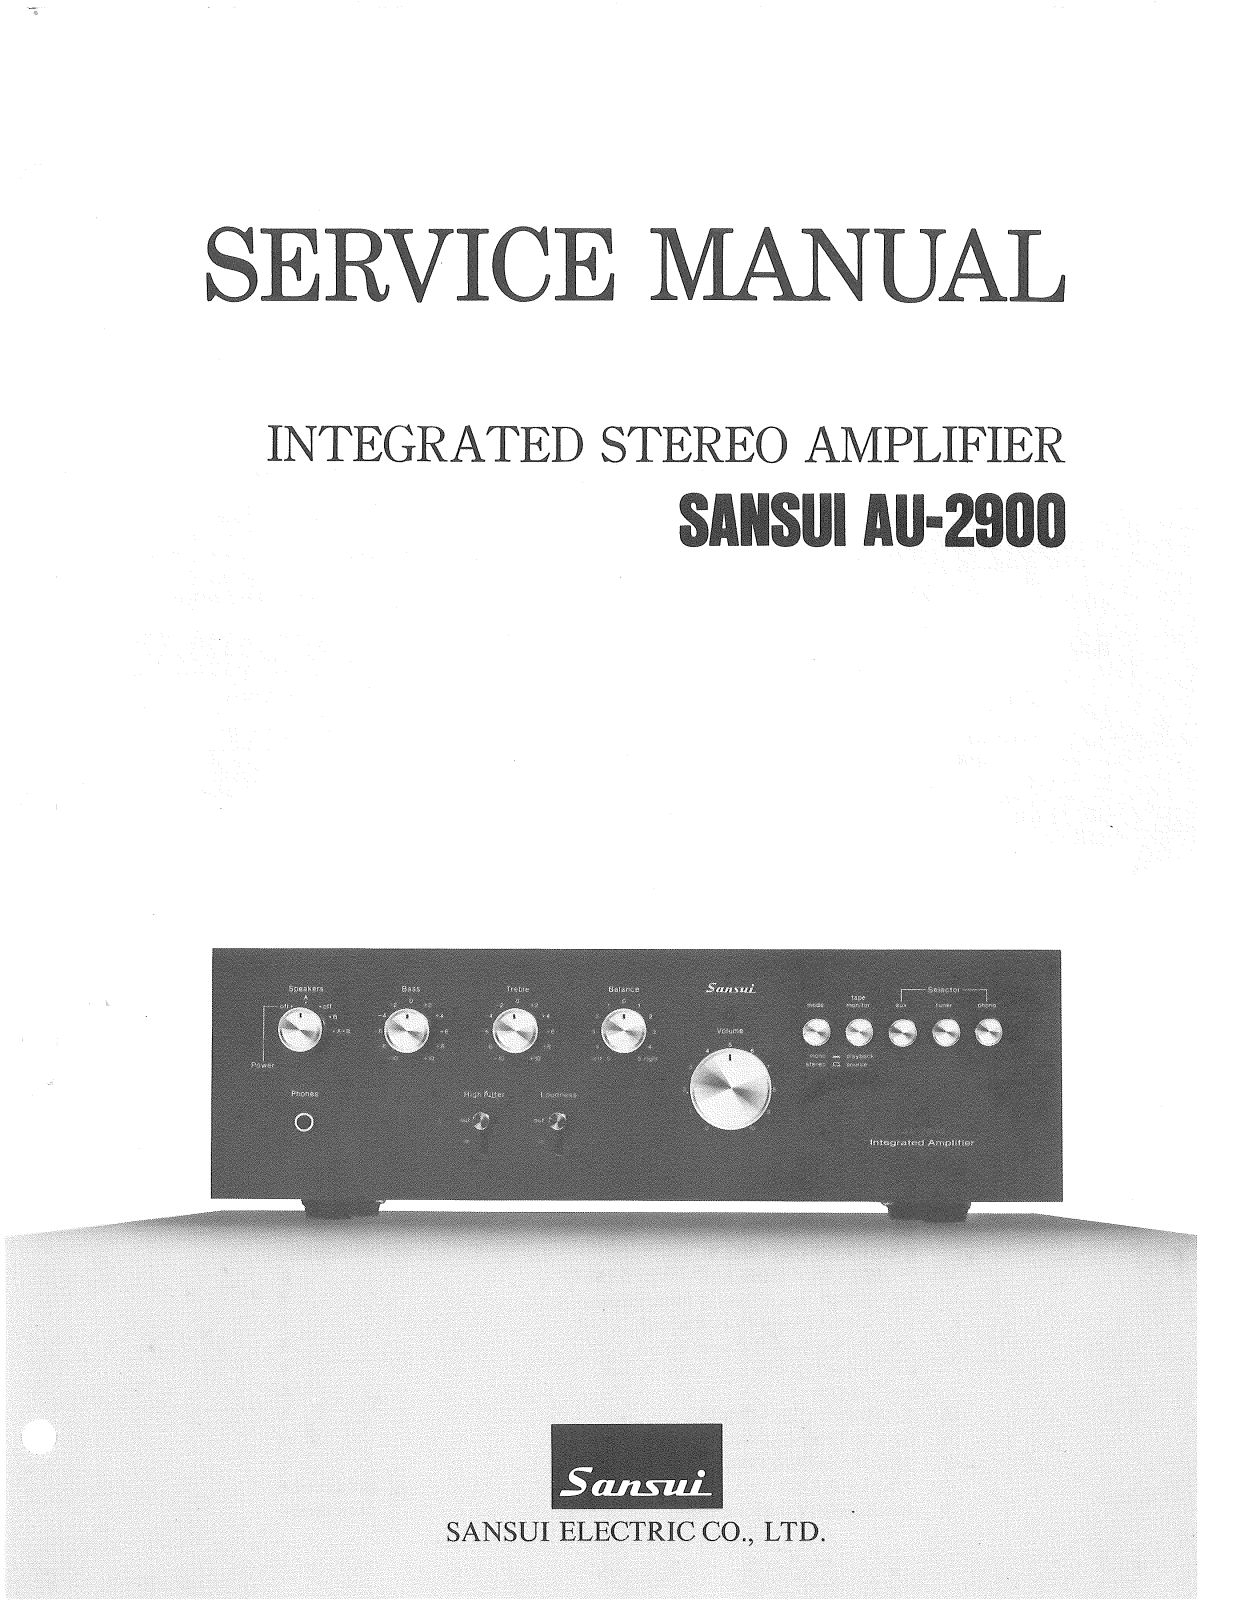 Sansui AU-2900 Service Manual